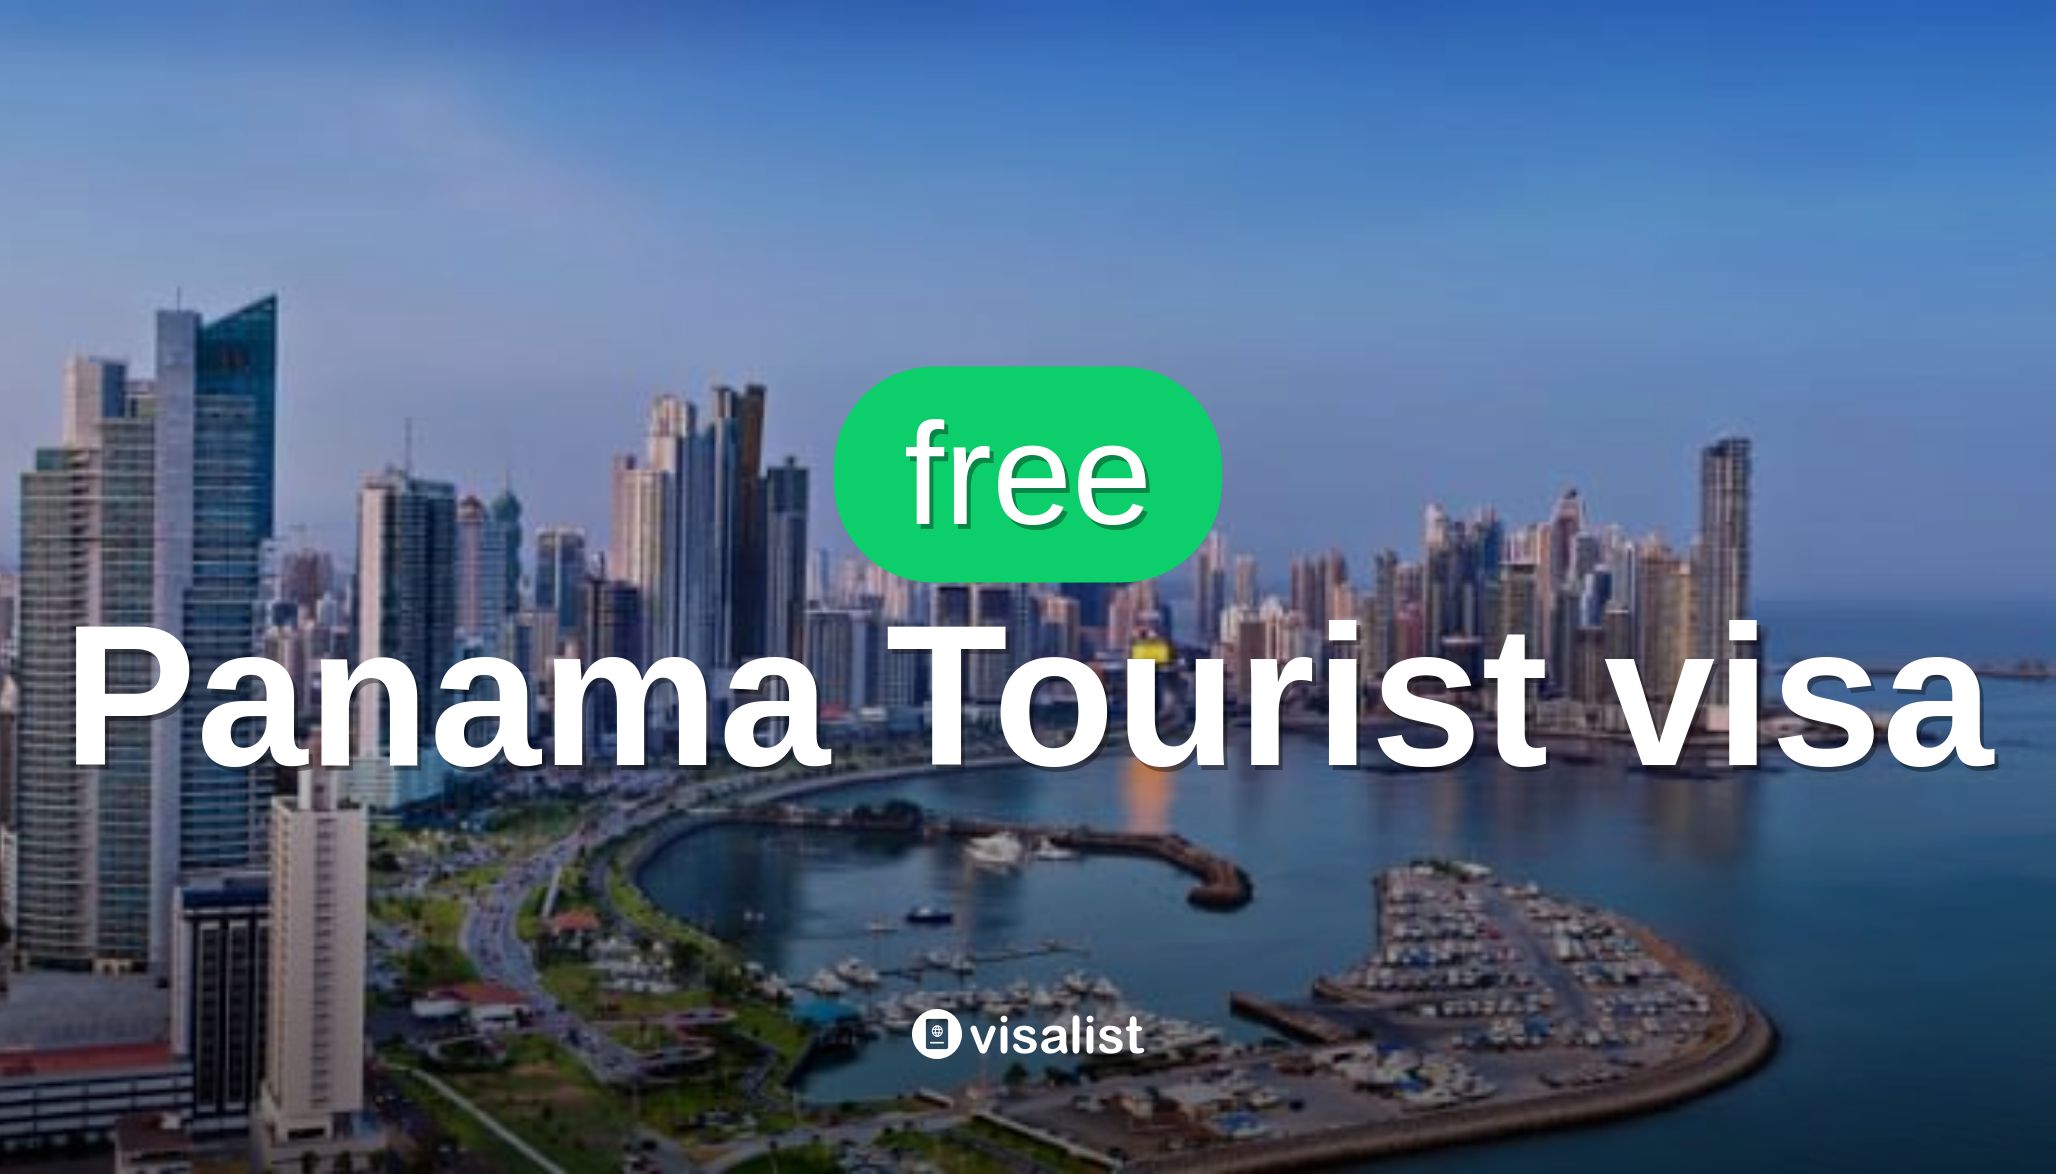 us tourist visa for panama citizens